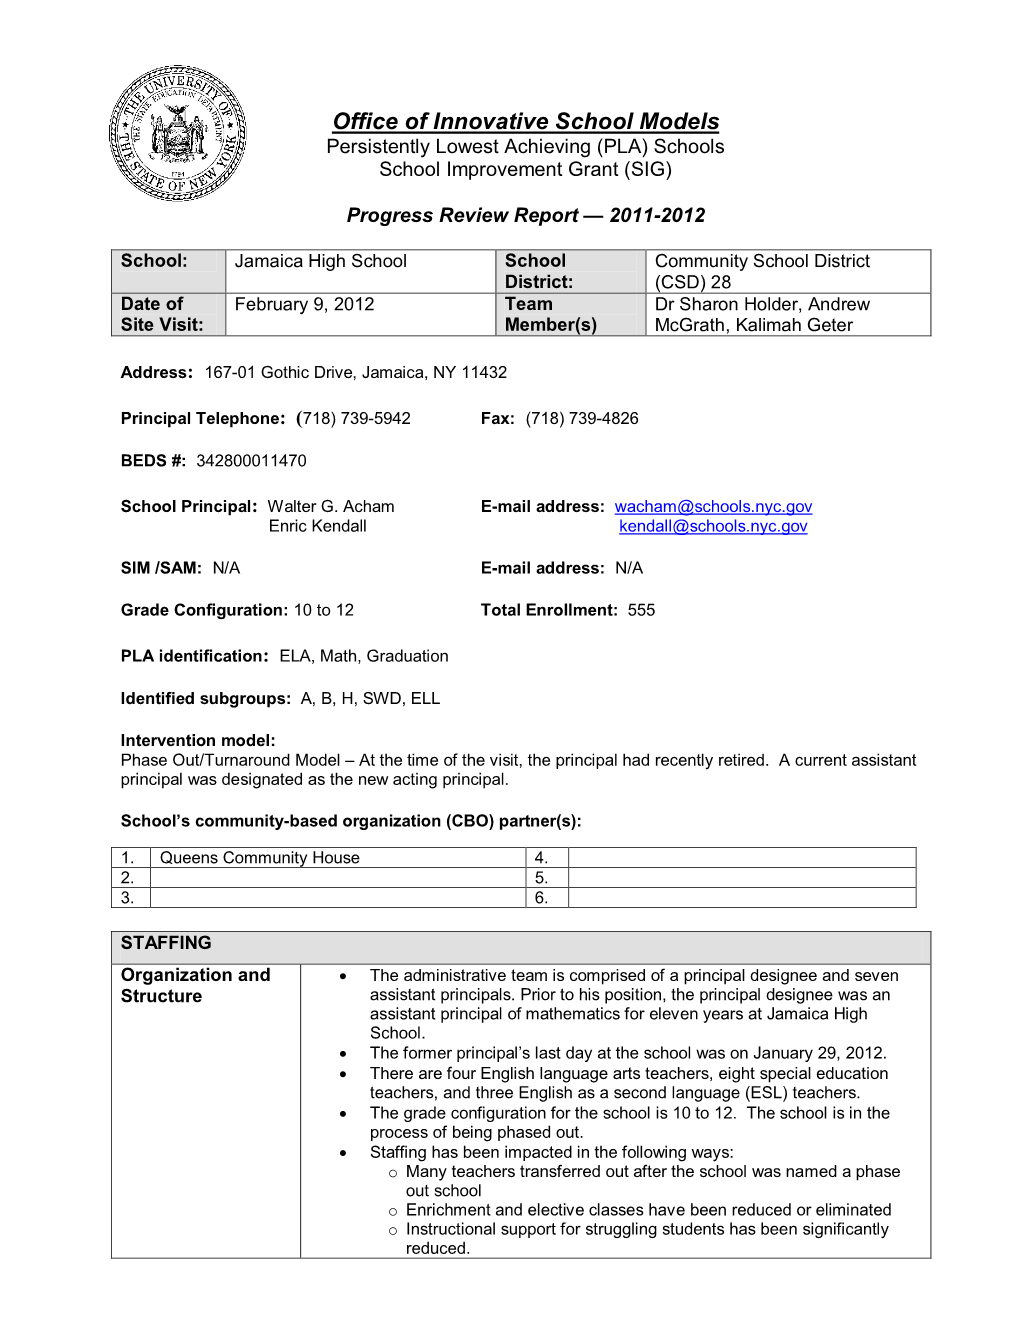 Jamaica High School ~ February 2012 Progress Review Report